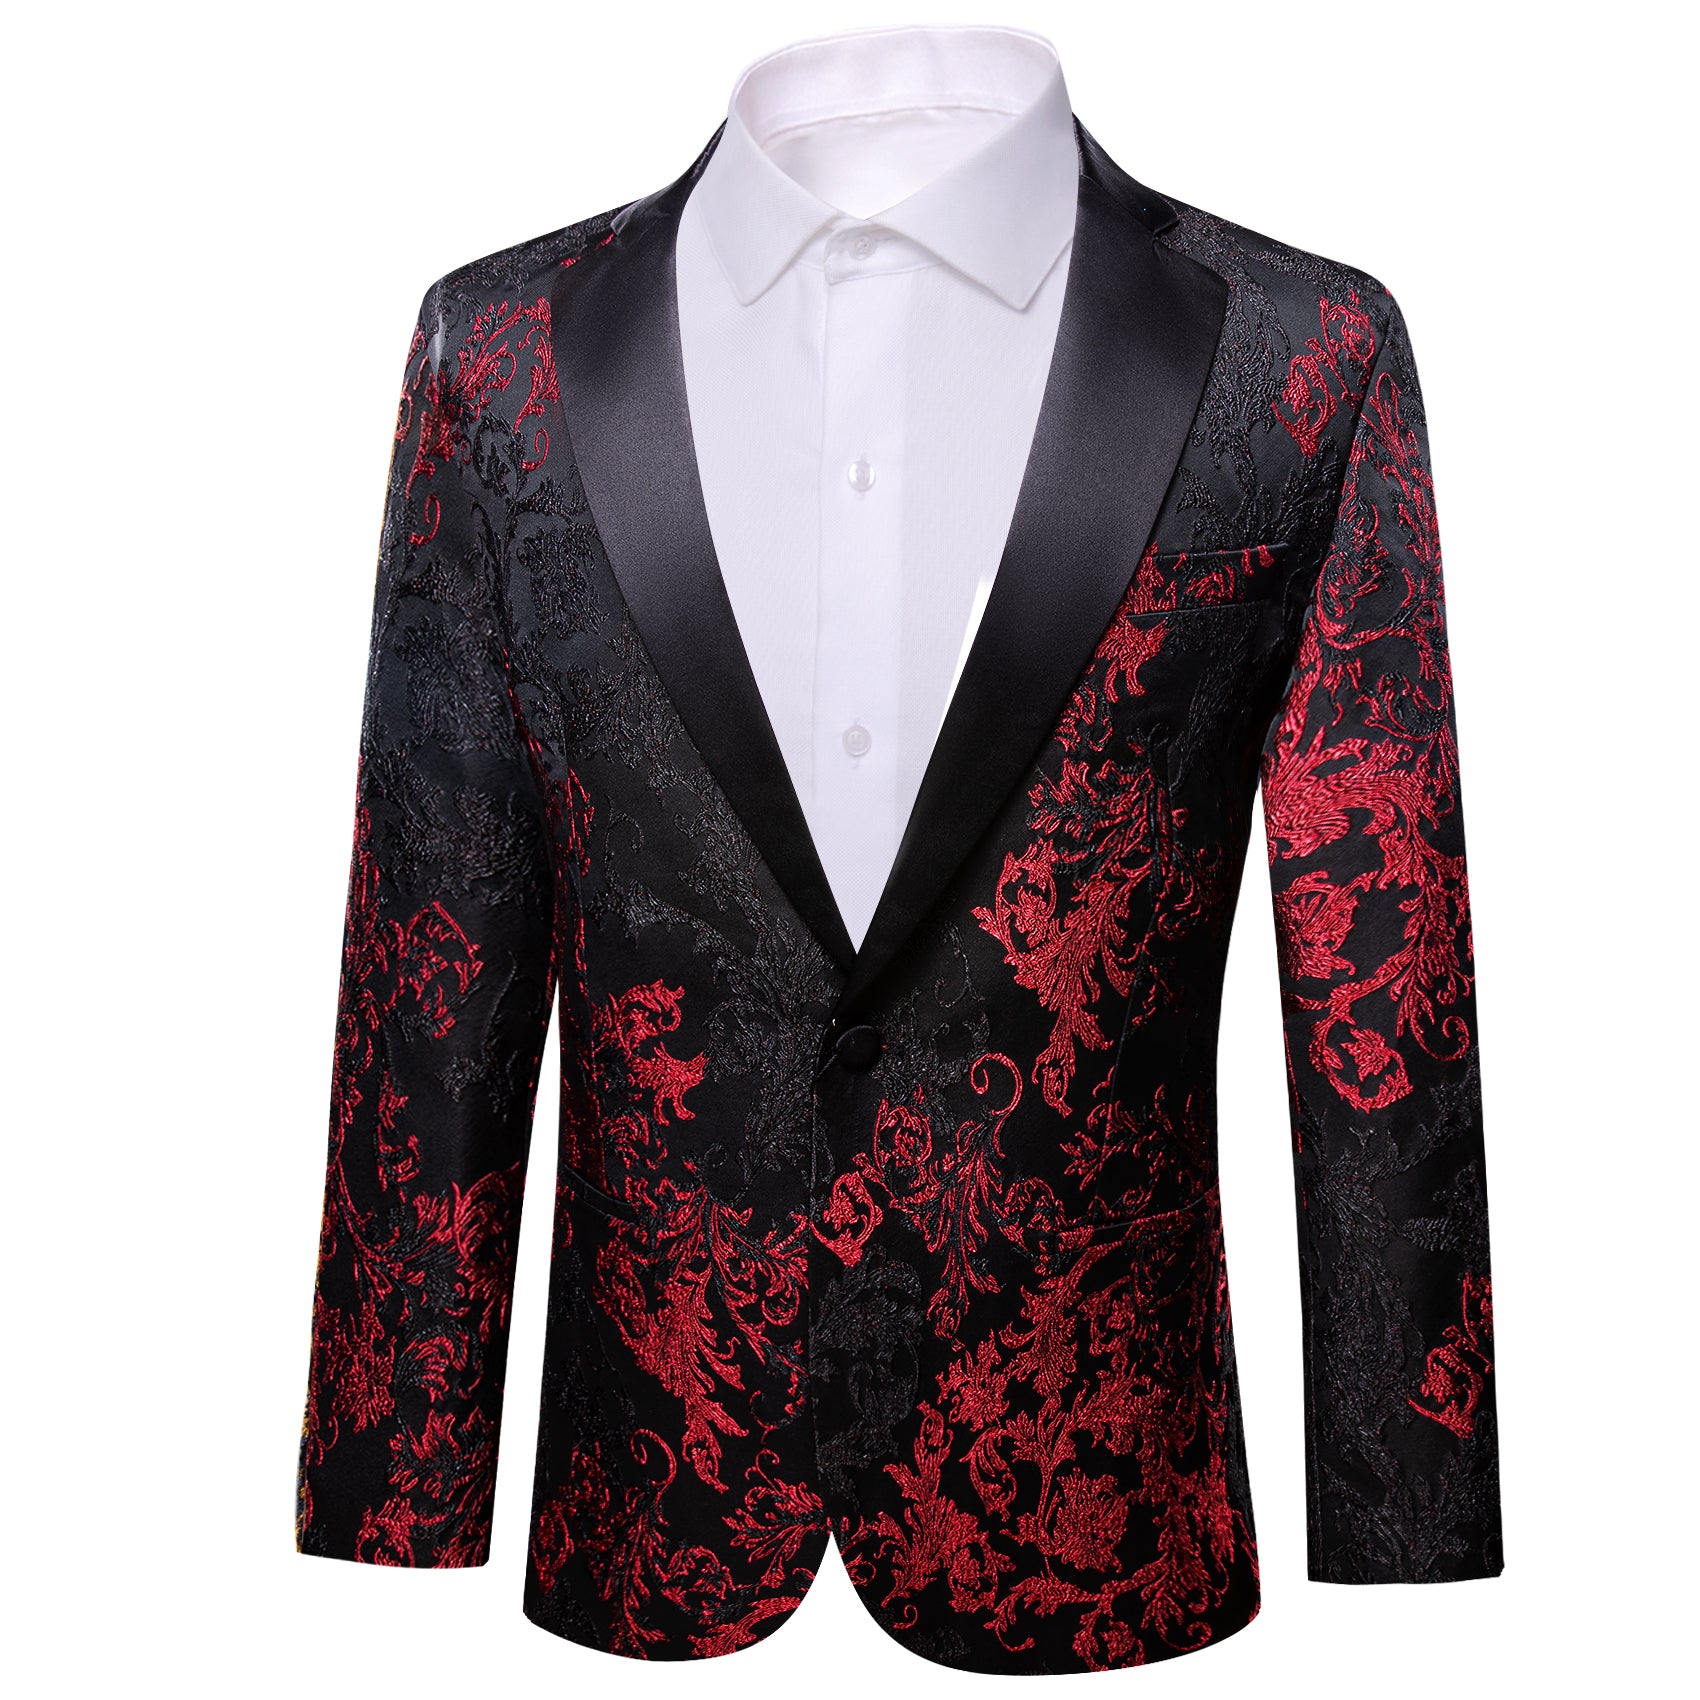 Barry.wang Notched Collar Suit Men's Red Black Paisley Suit Jacket